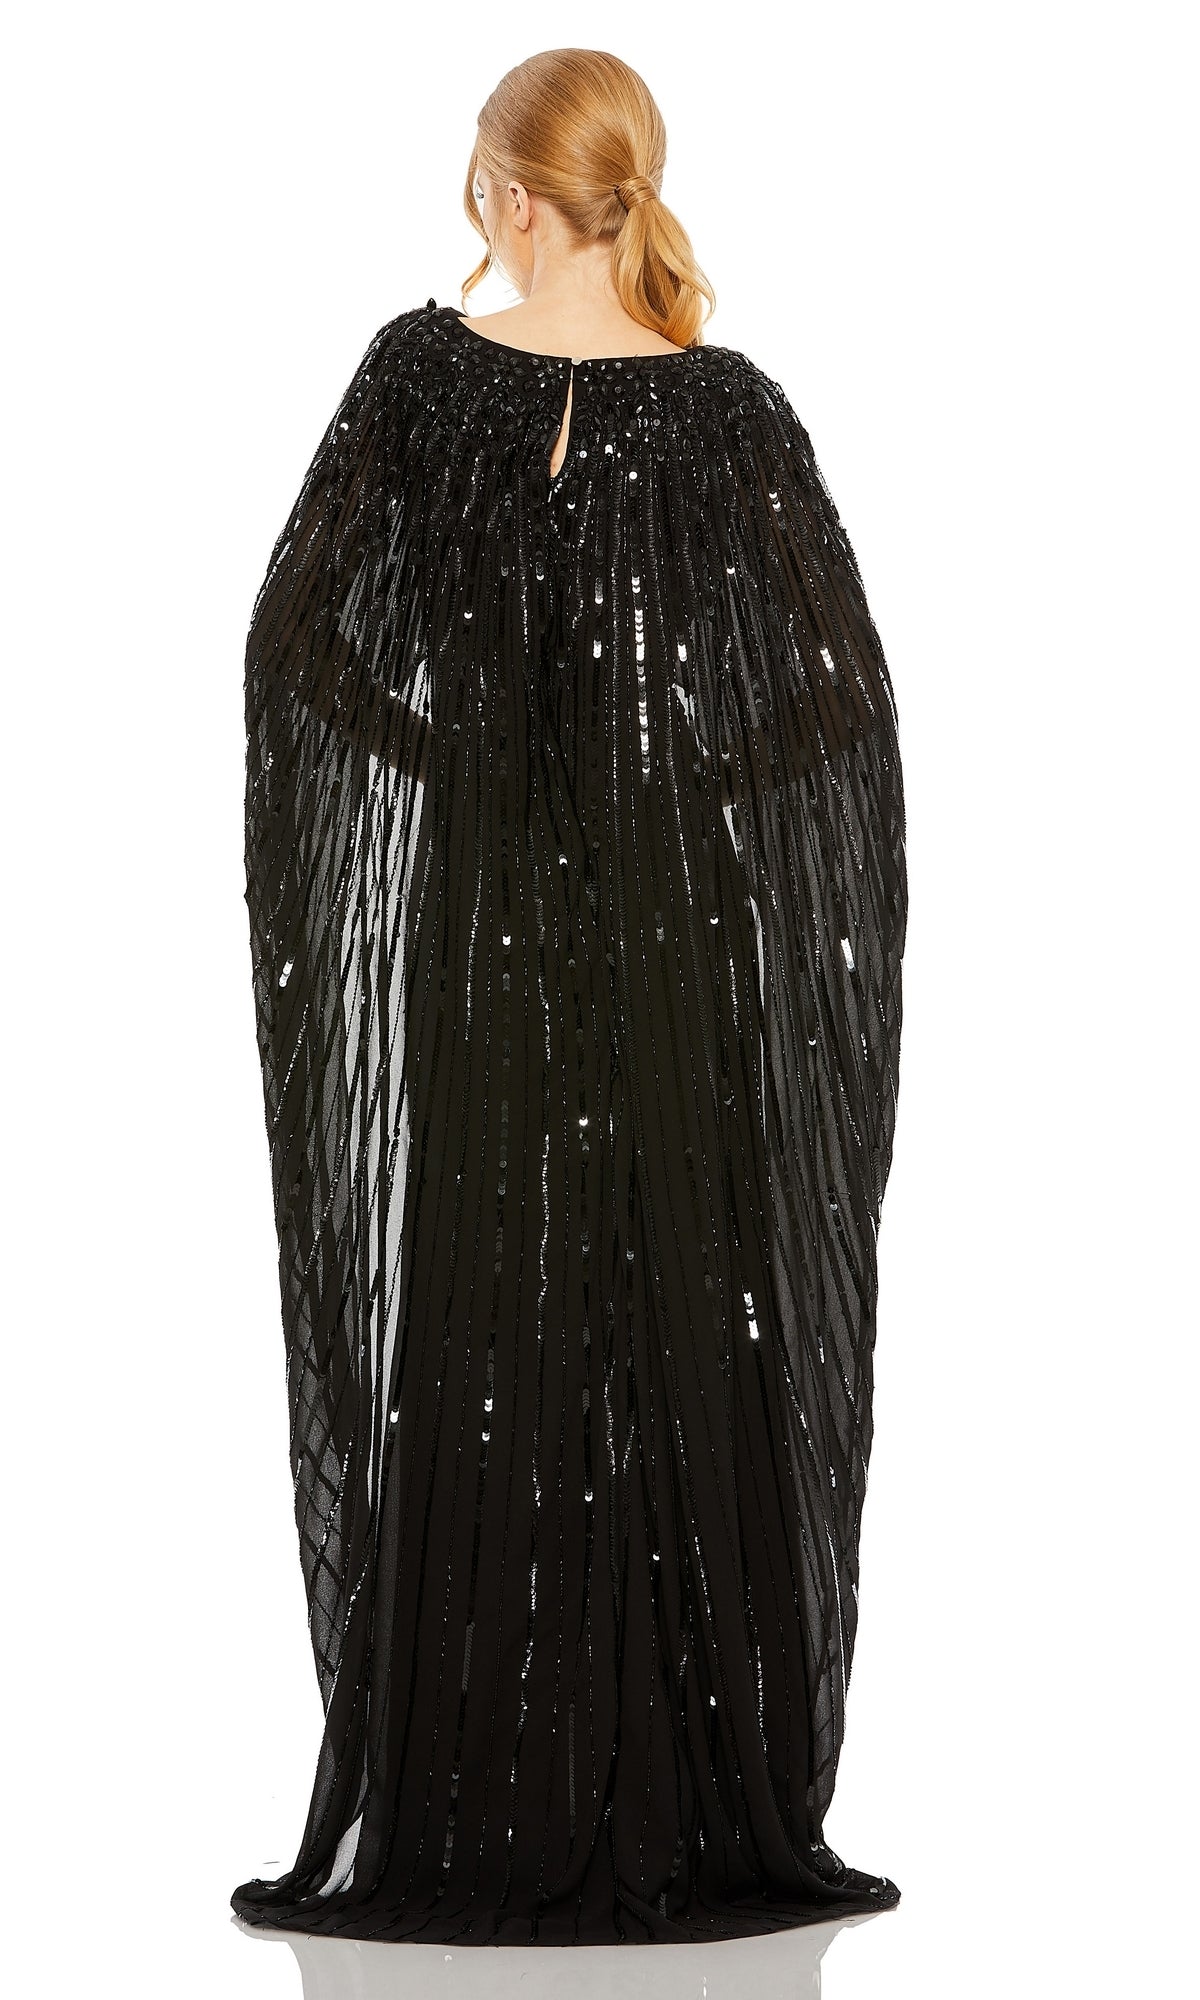 Long Black Formal Dress 93869 by Mac Duggal